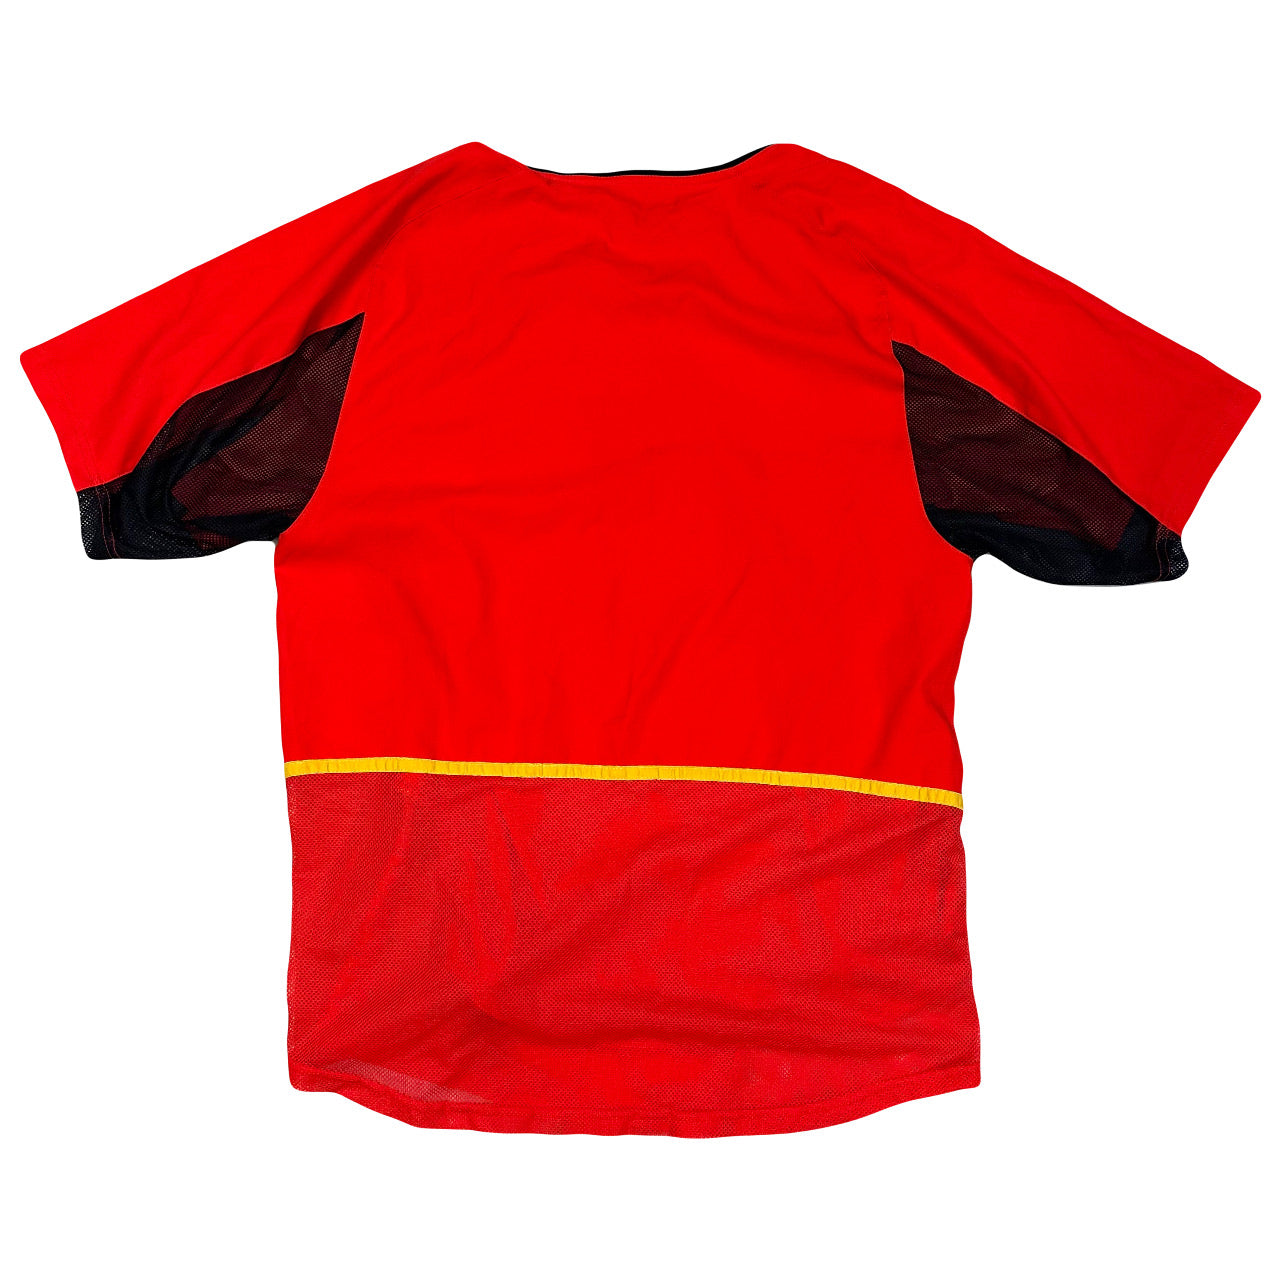 Nike 2002 Belgium Shirt ( S )